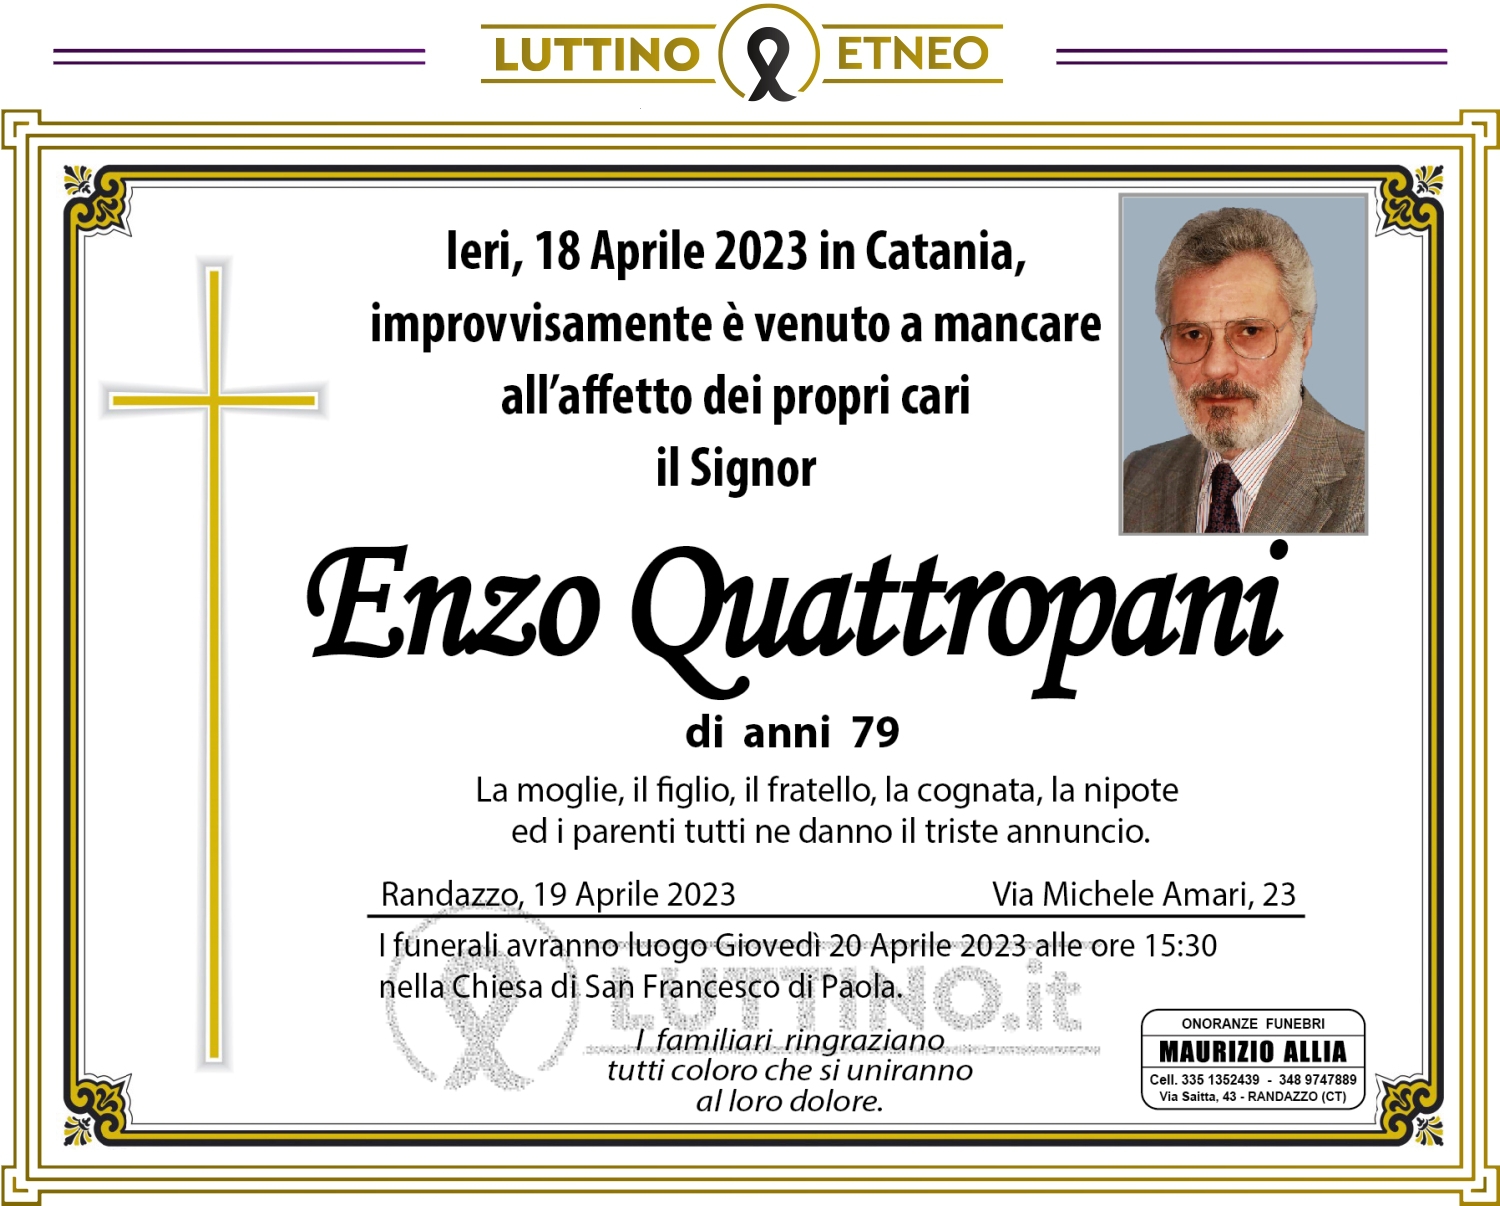 Enzo Quattropani